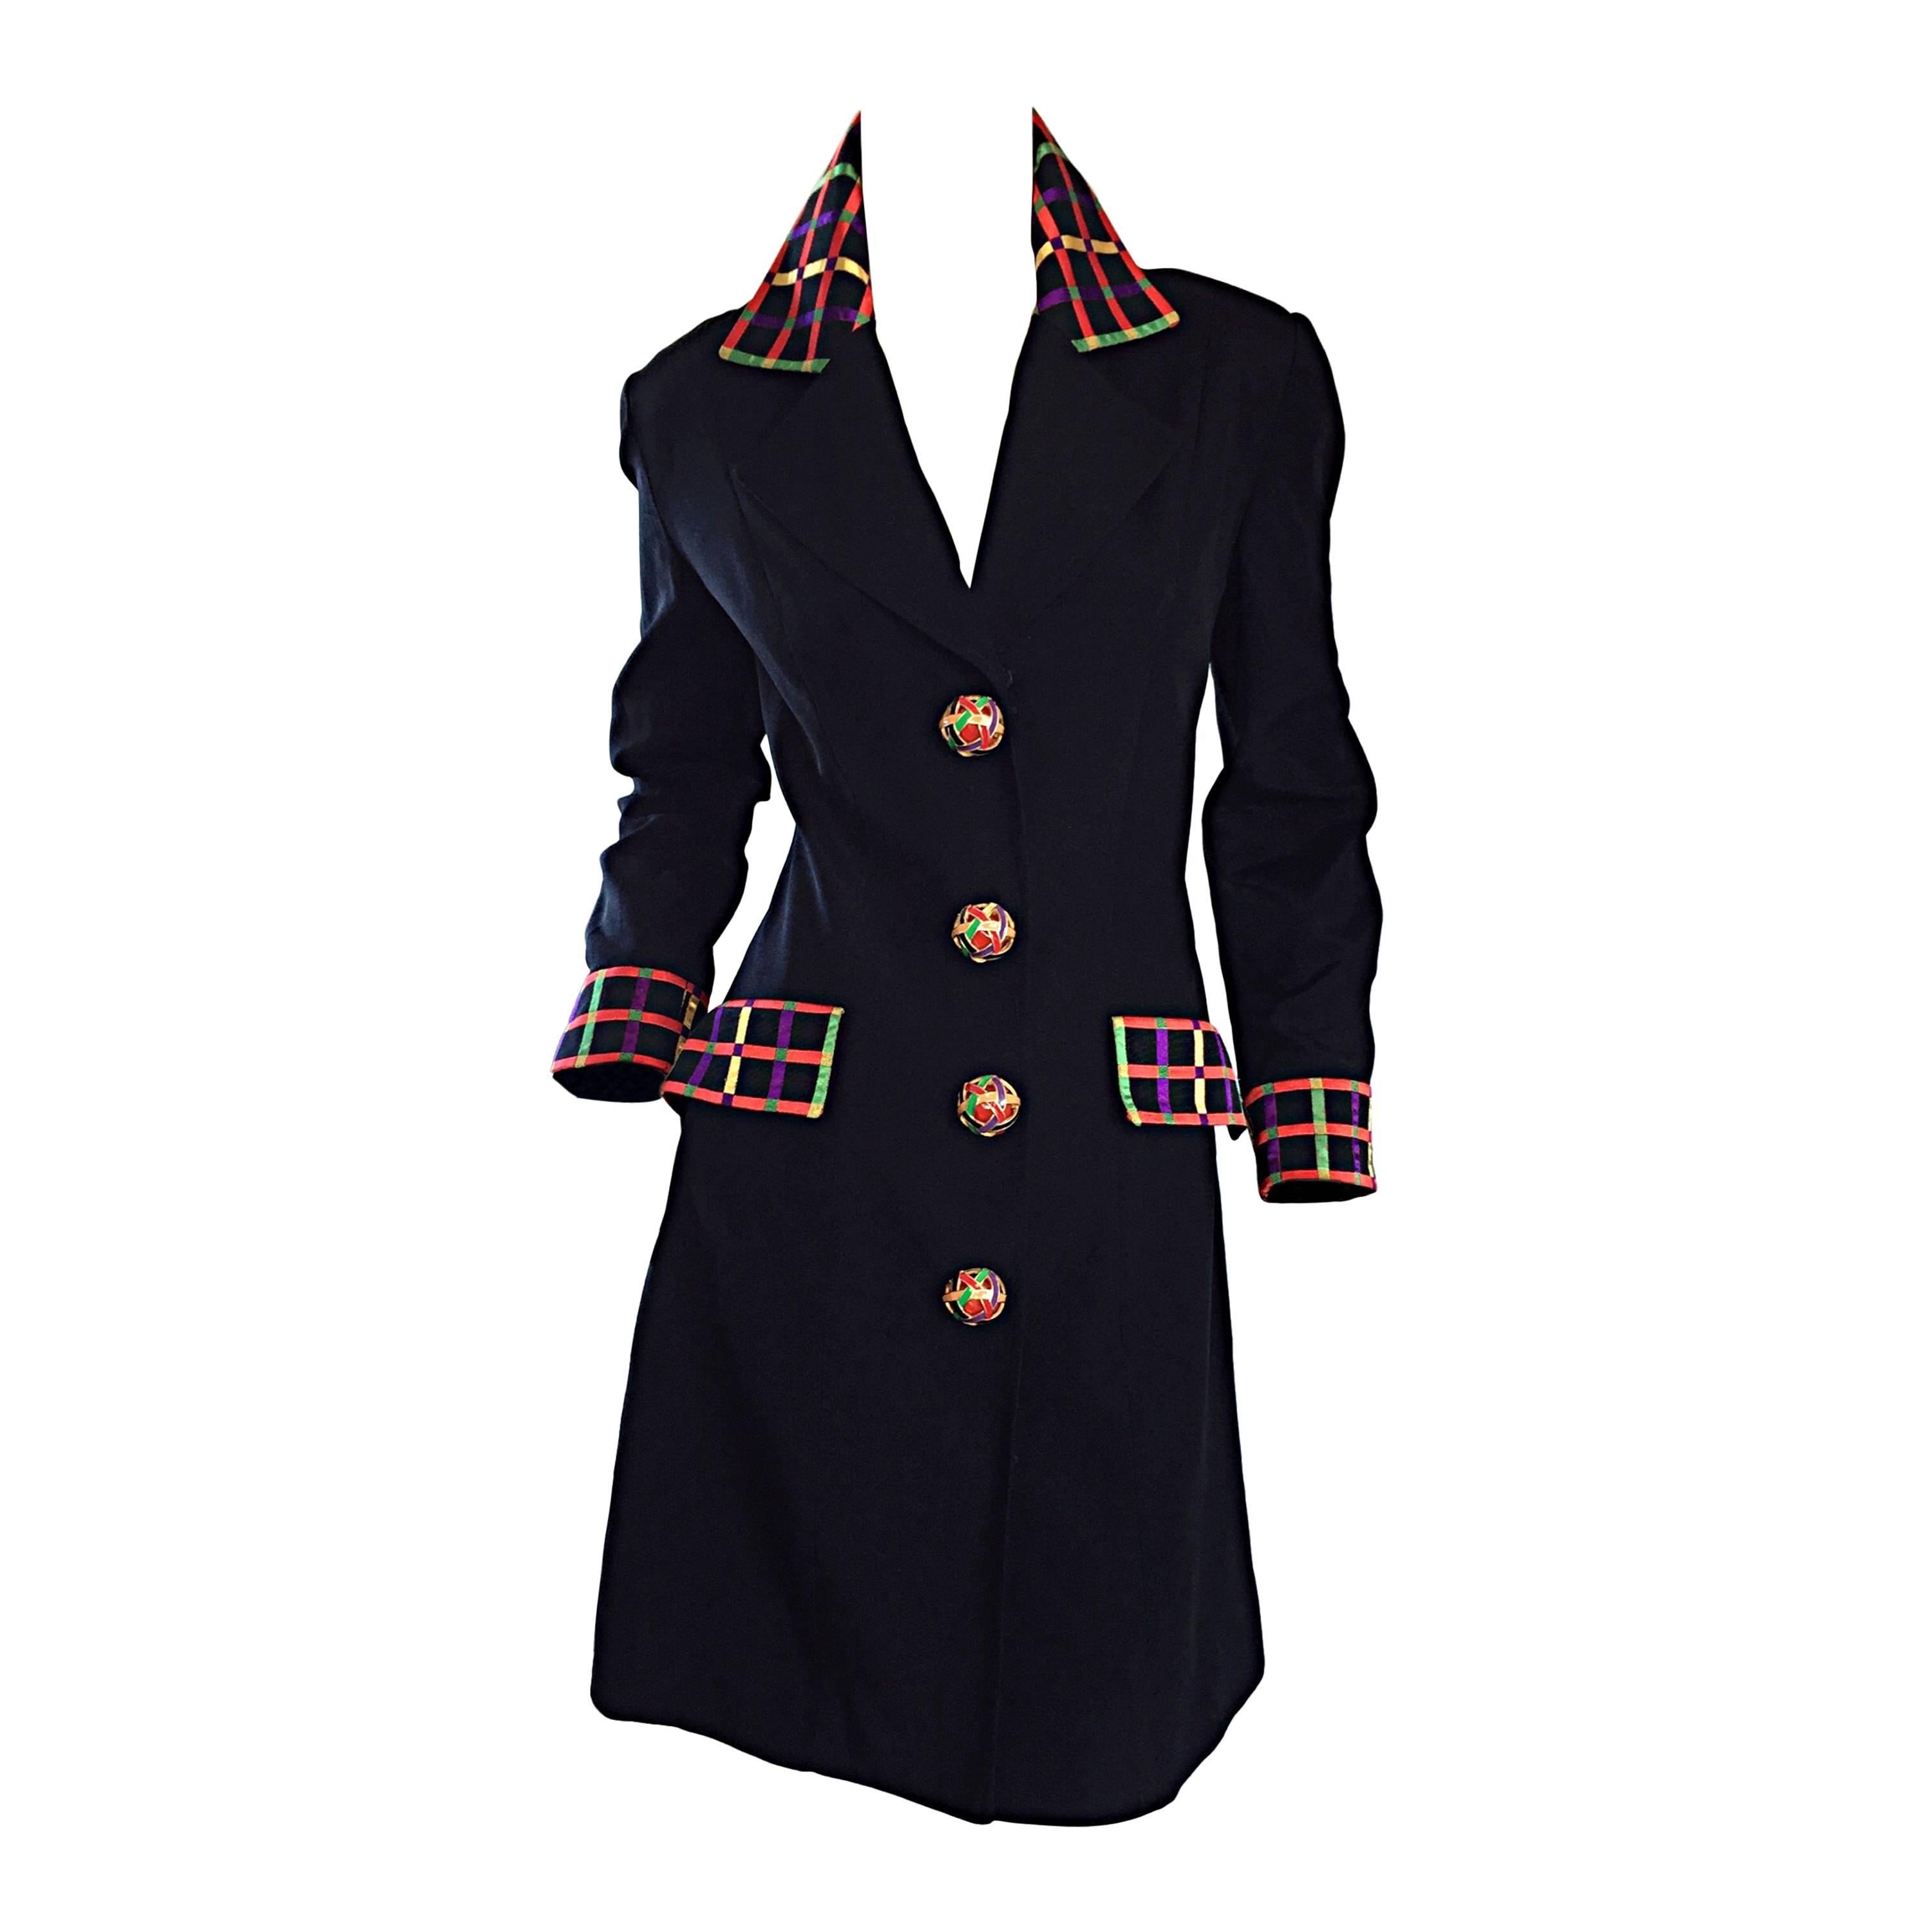 Vintage Kathryn Dianos Black Jacket Dress w/ Plaid Details + Dome Buttons